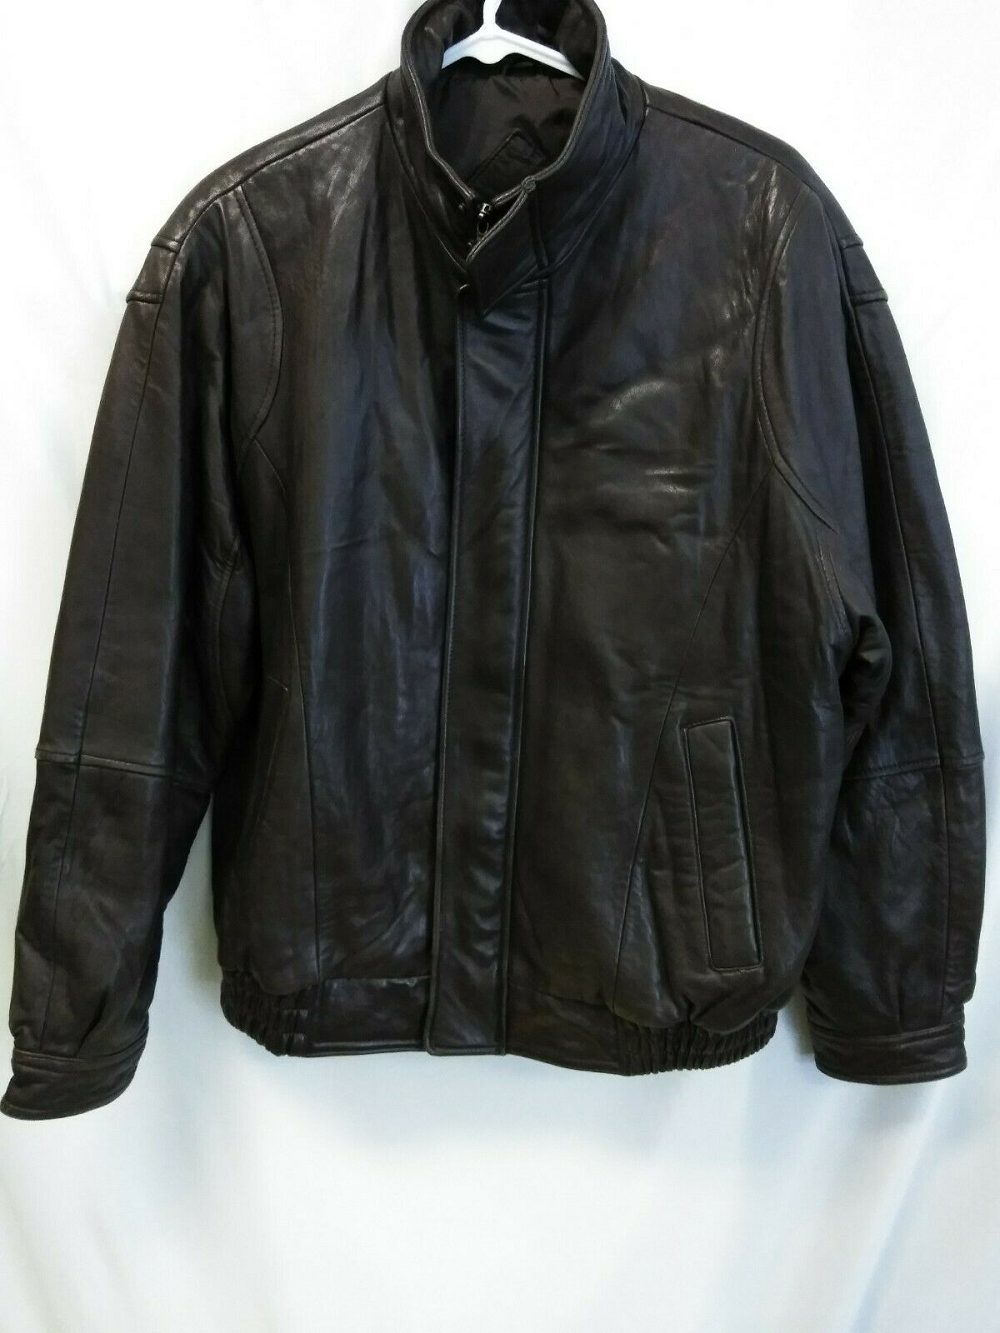 Brandini Le Collezioni Bomber Leather Jacket - AirBorne Jacket